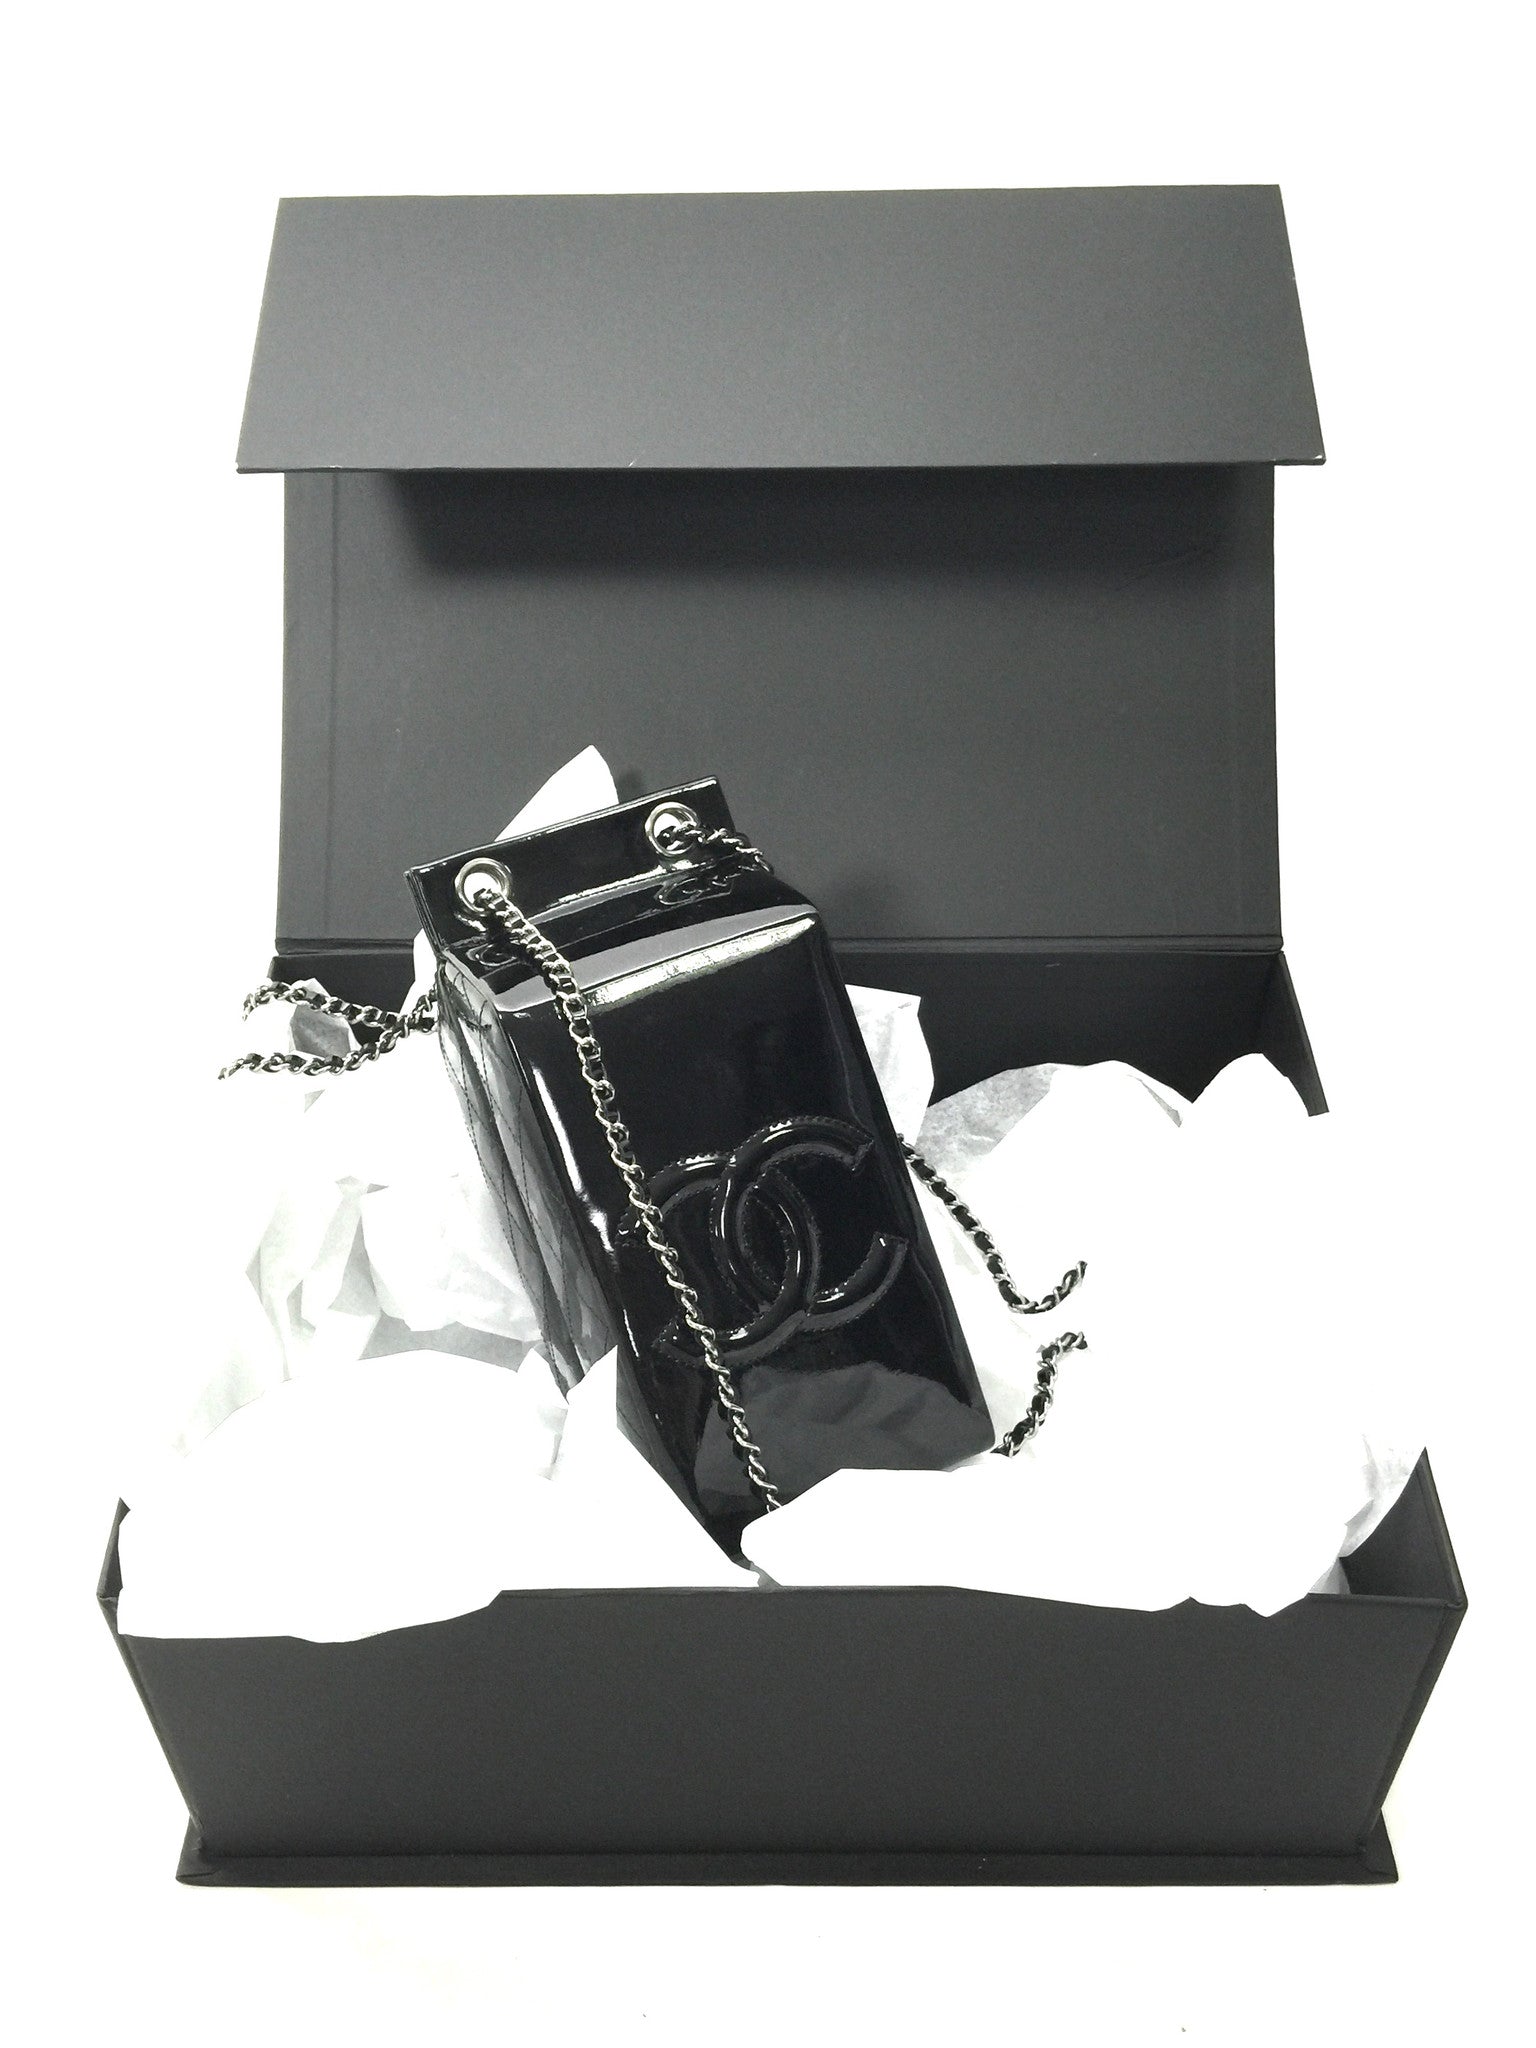 Chanel Limited Edition Milk Carton Leather Bag - Closet Upgrade